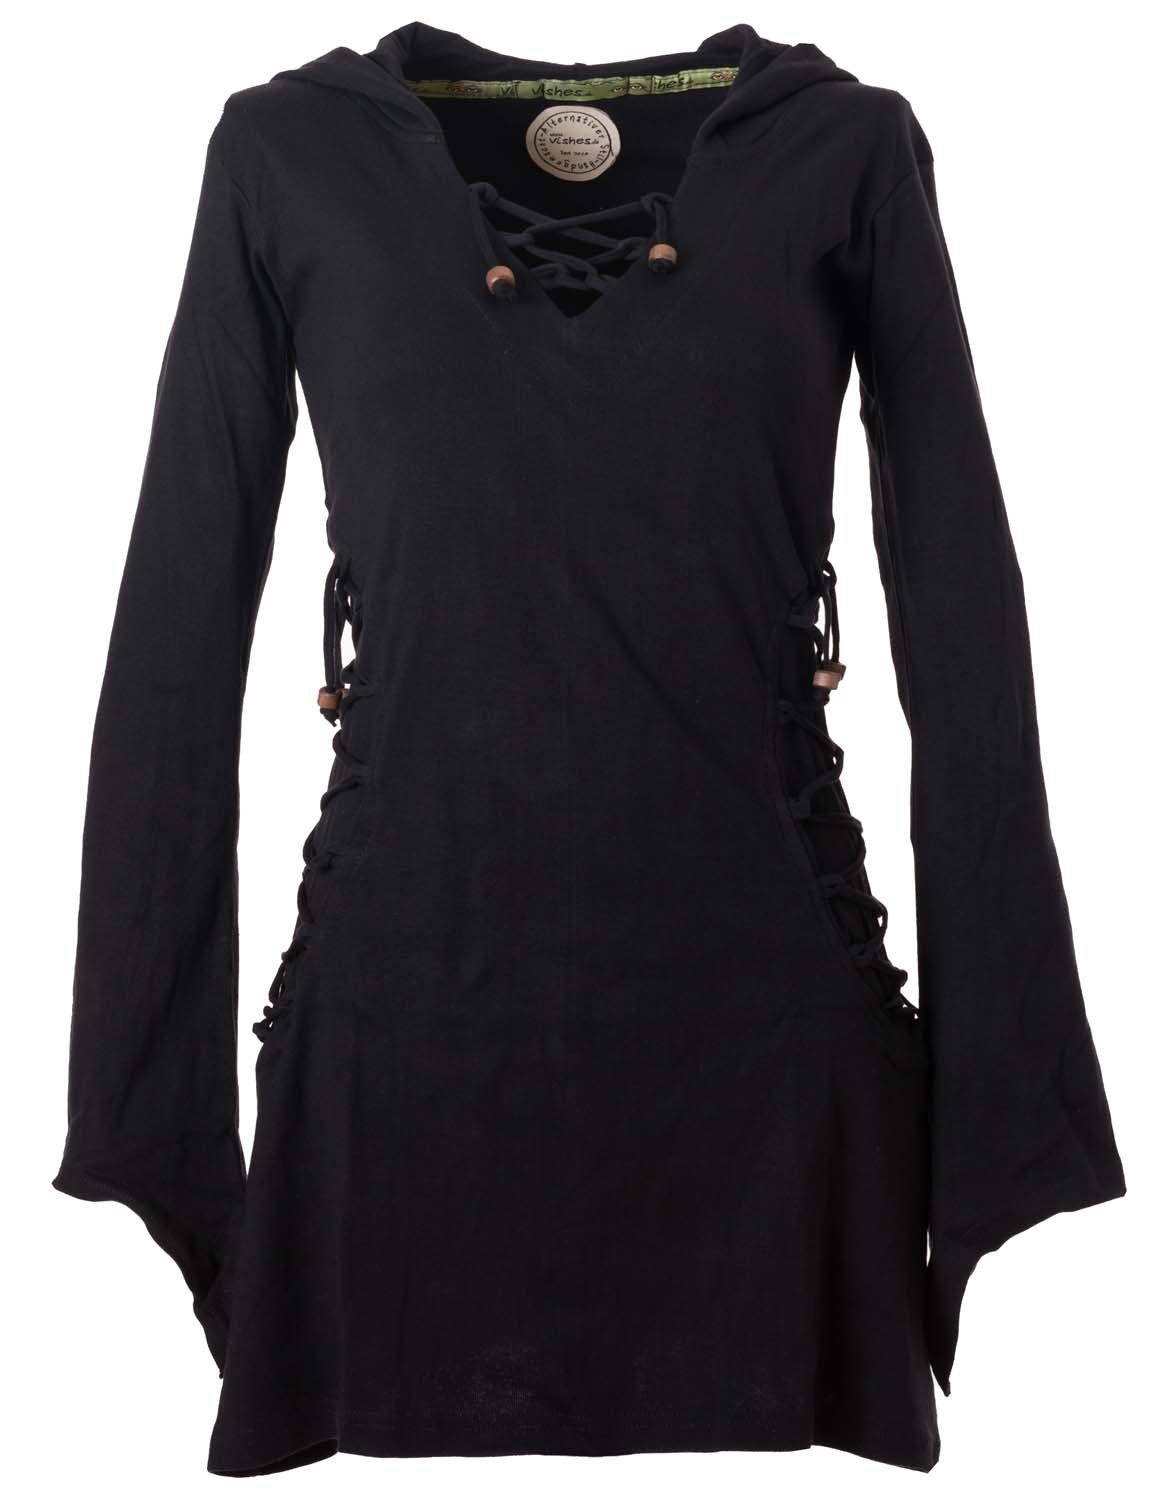 Vishes Zipfelkleid Elfenkleid mit Zipfelkapuze Bändern zum Schnüren Ethno, Hoody, Gothik Style schwarz